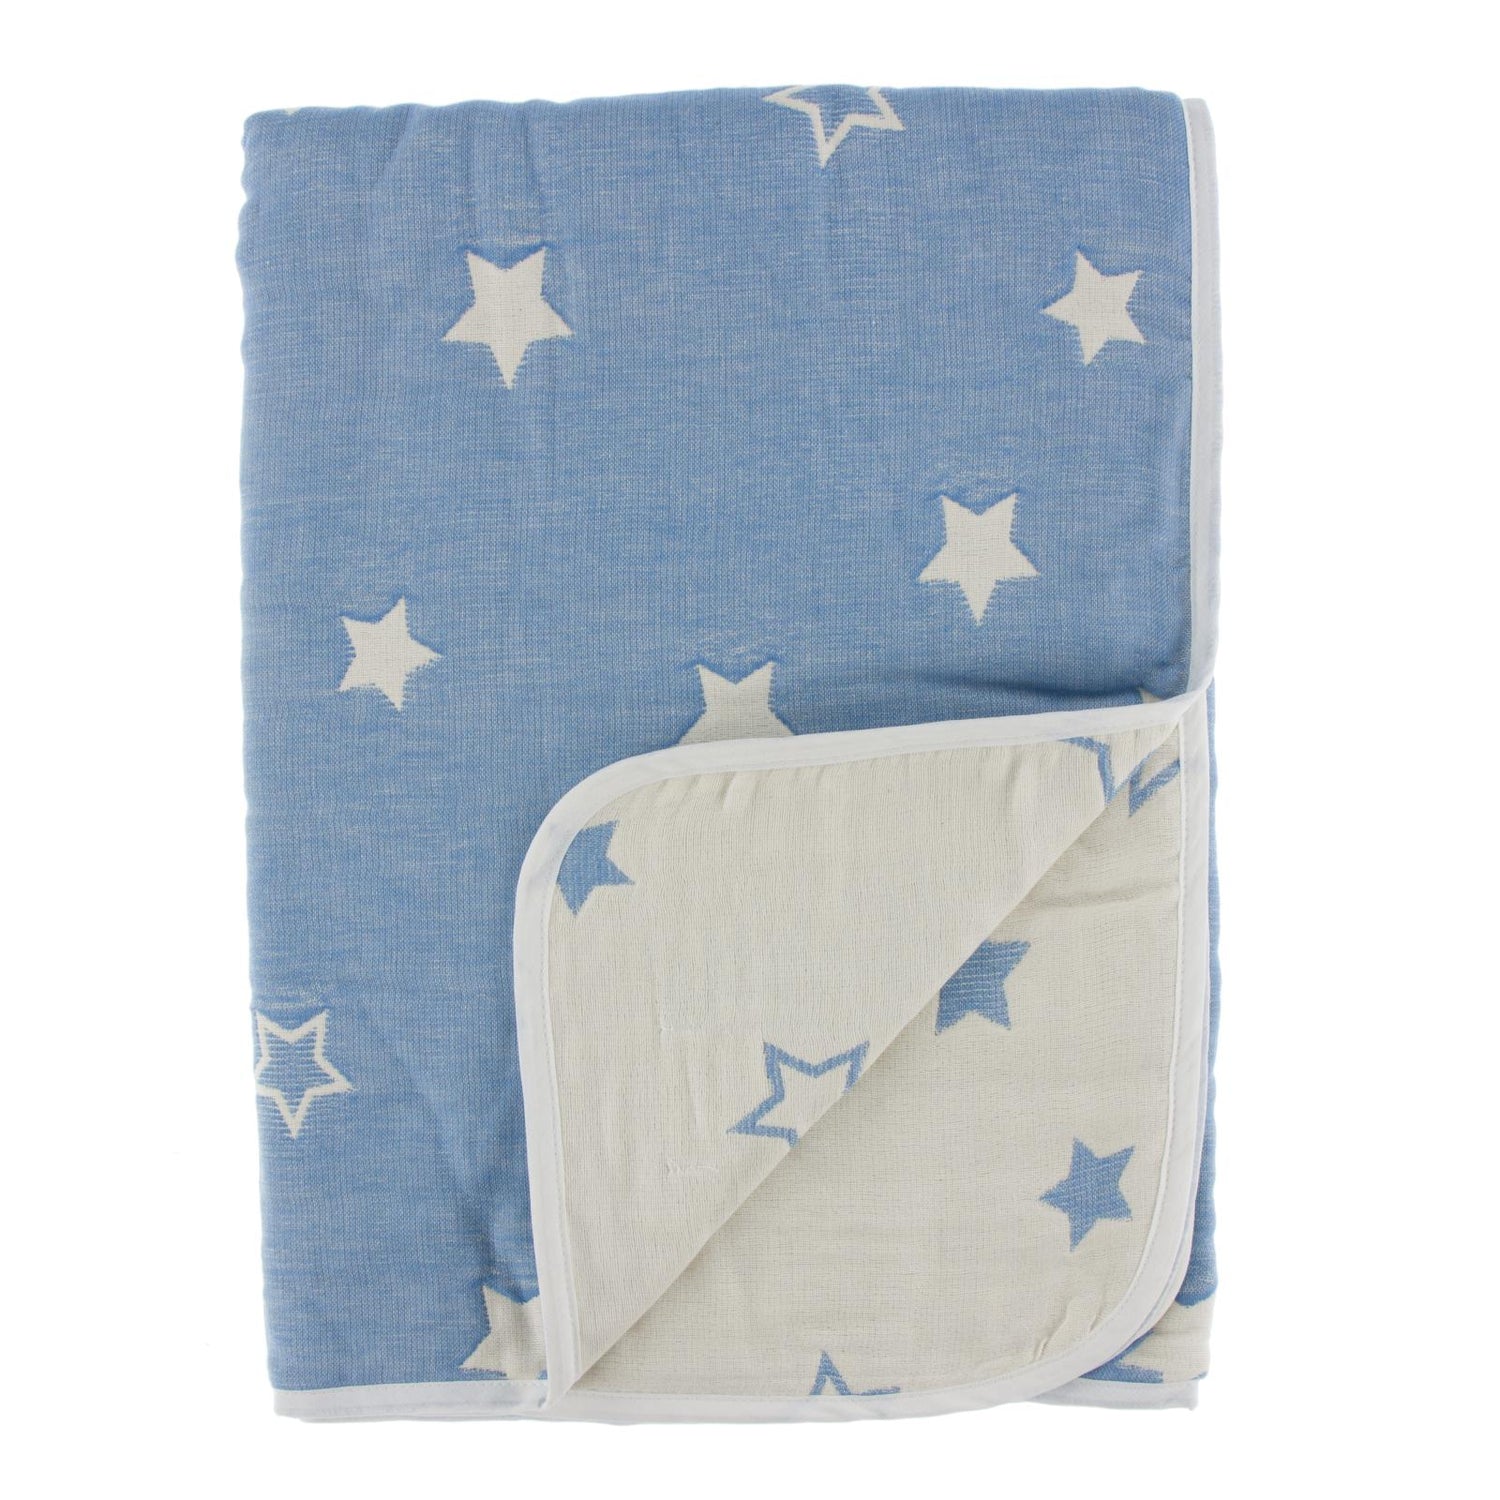 Jacquard Muslin Toddler/Kid Nap Blanket in Blue Star